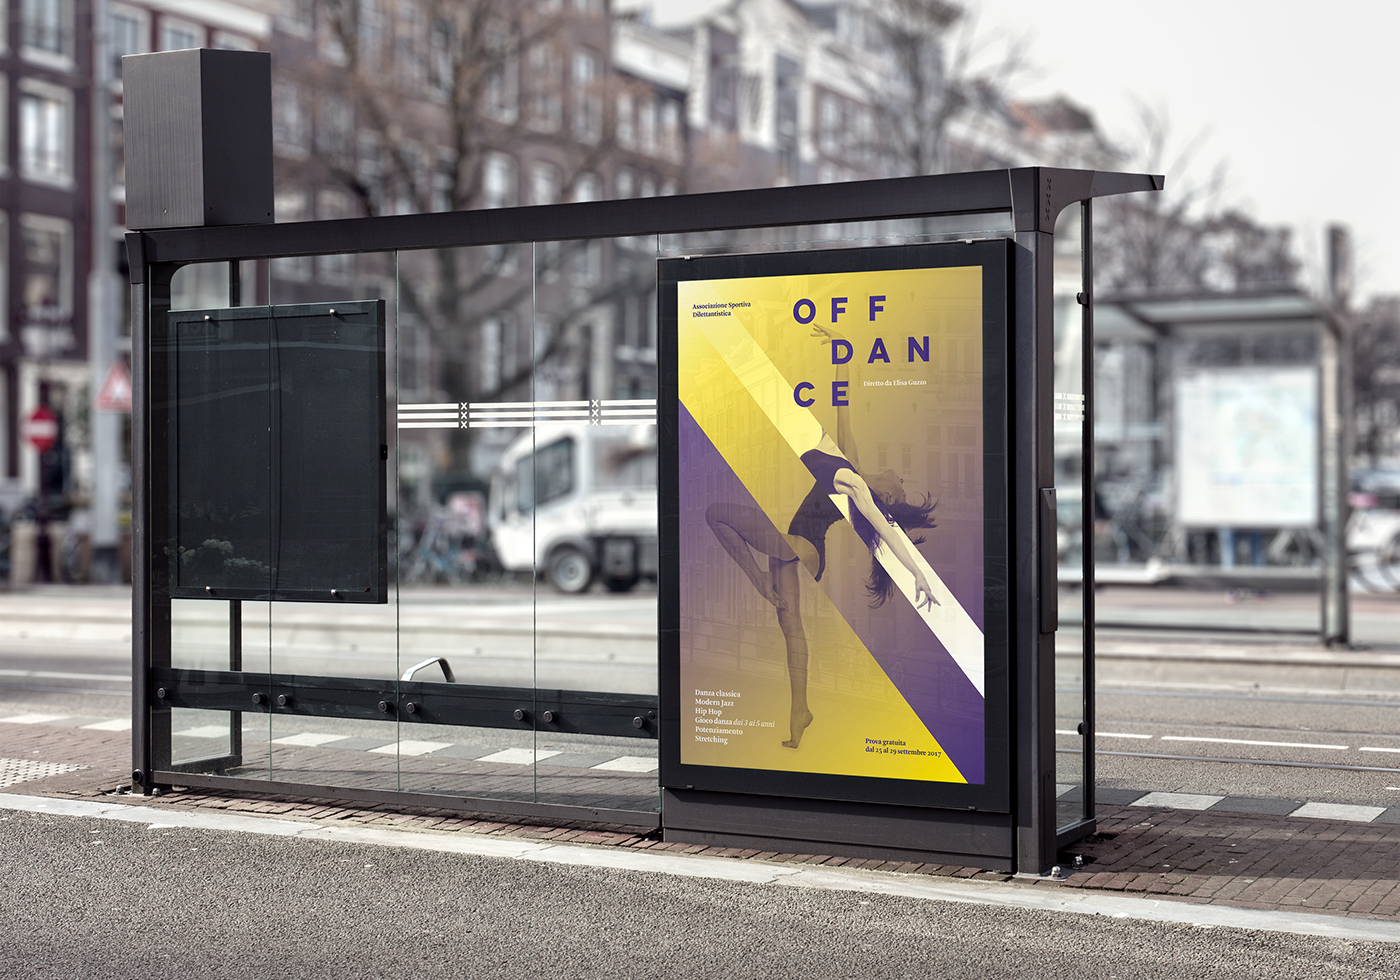 Advertising  manifesto DANCE   visualidentity poster yellow violet